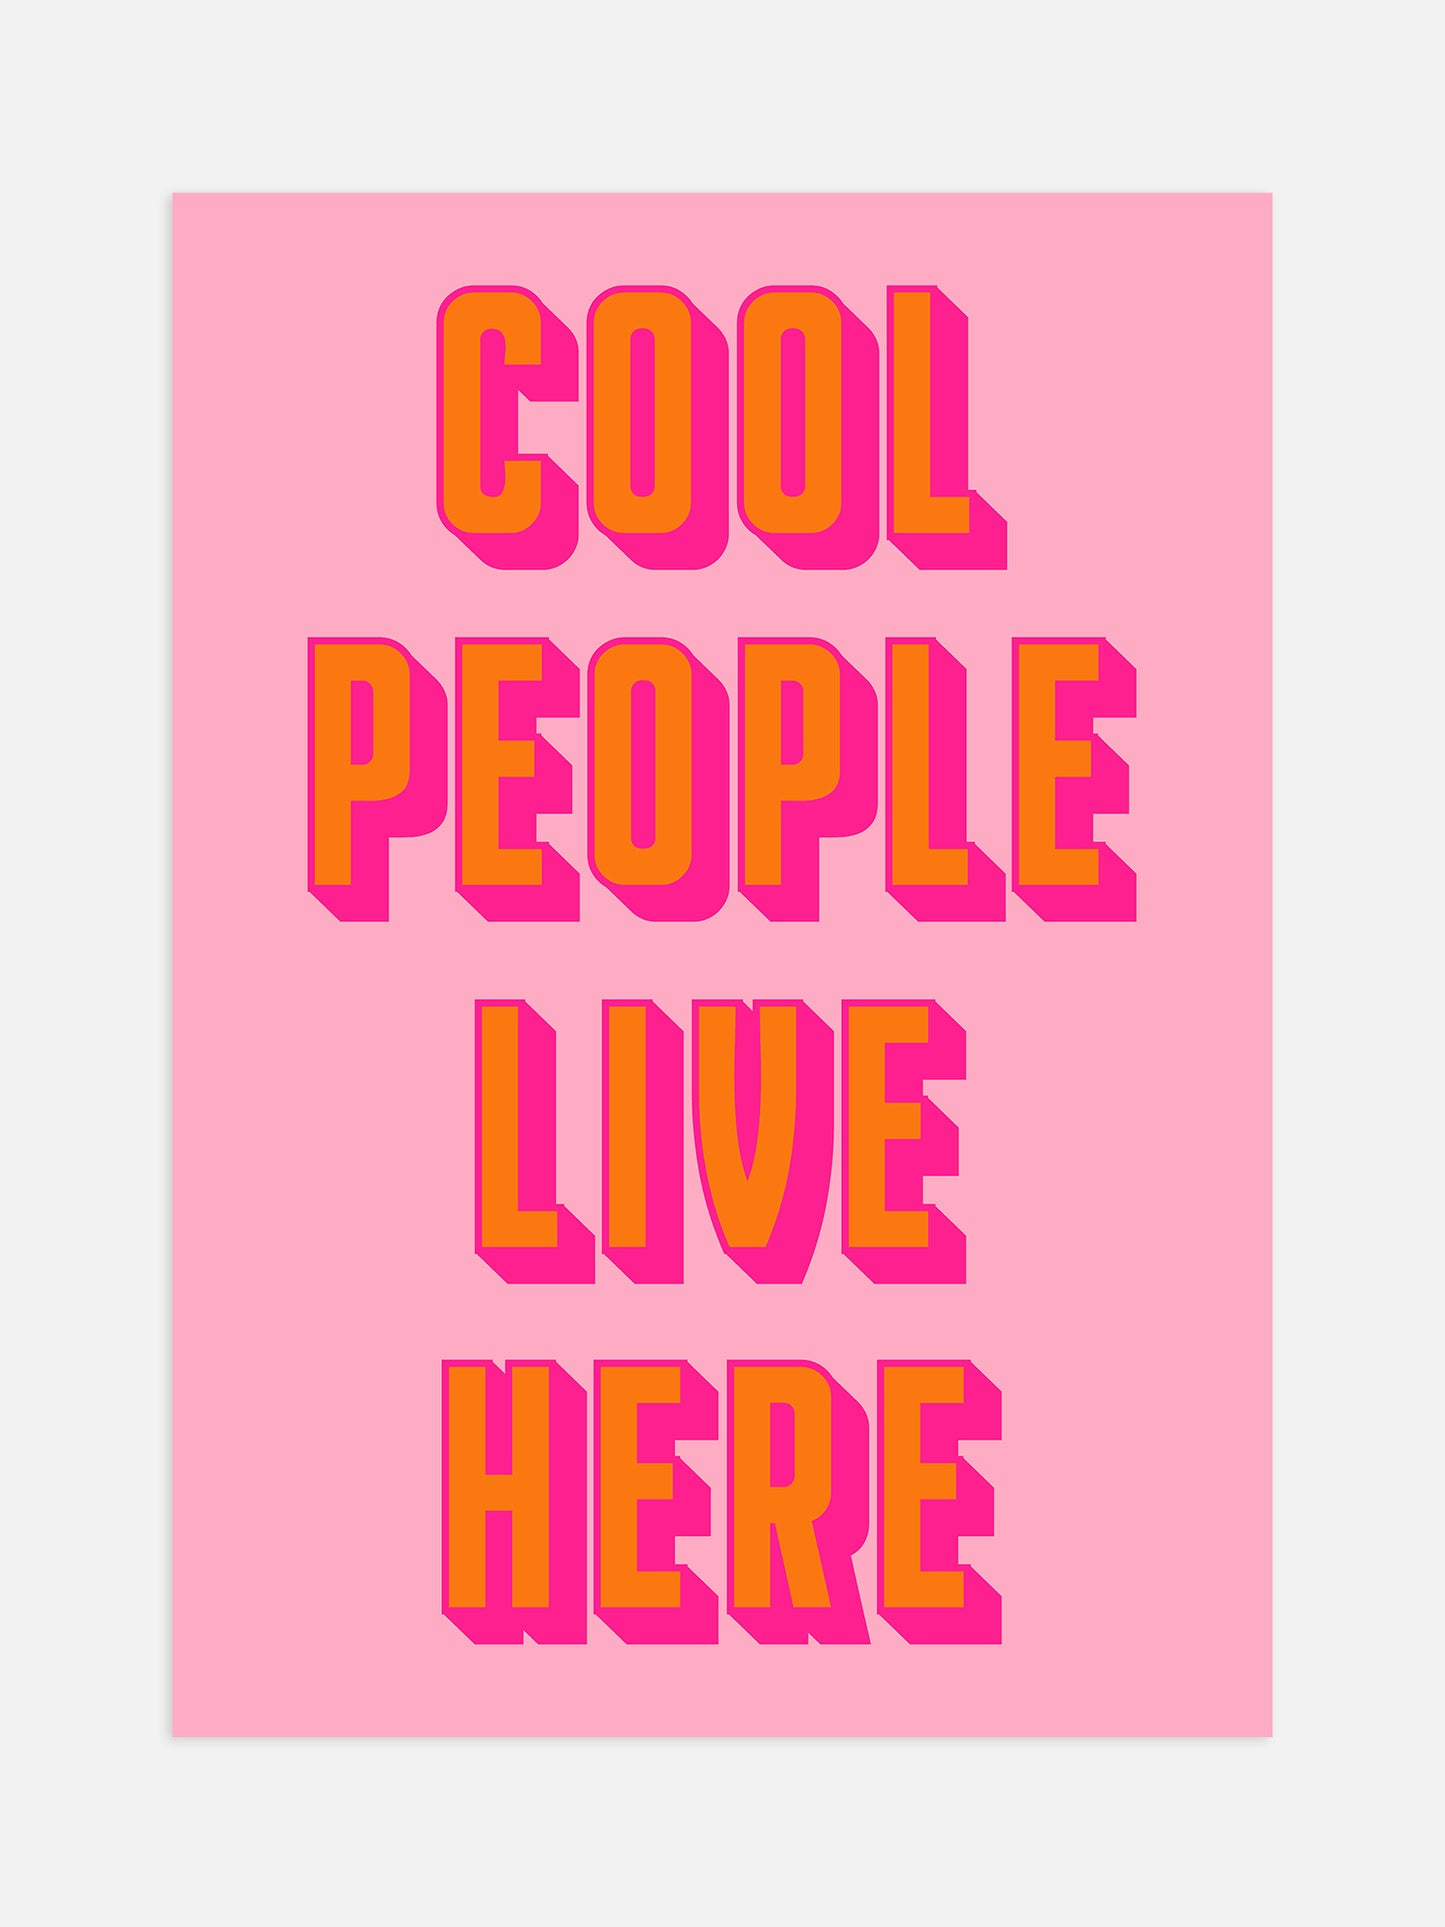 Cool People Live Here Print | Digital Download